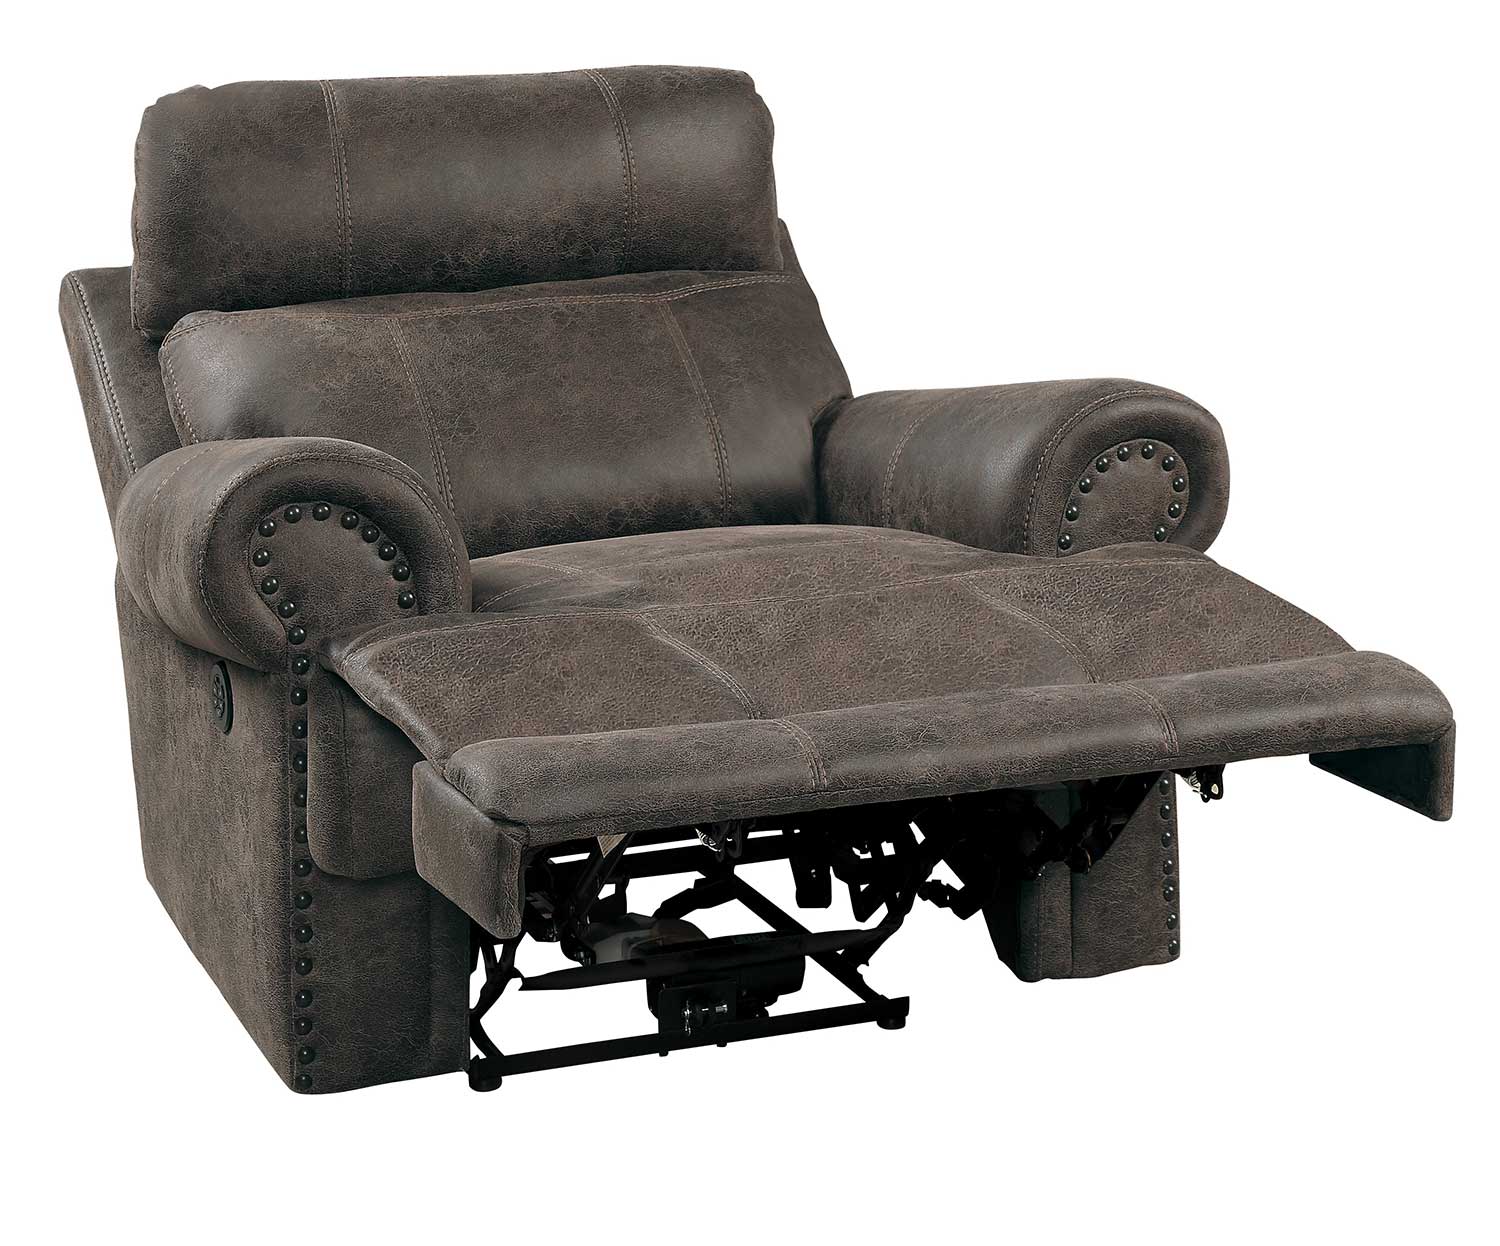 Homelegance Aggiano Glider Reclining Chair - Dark Brown